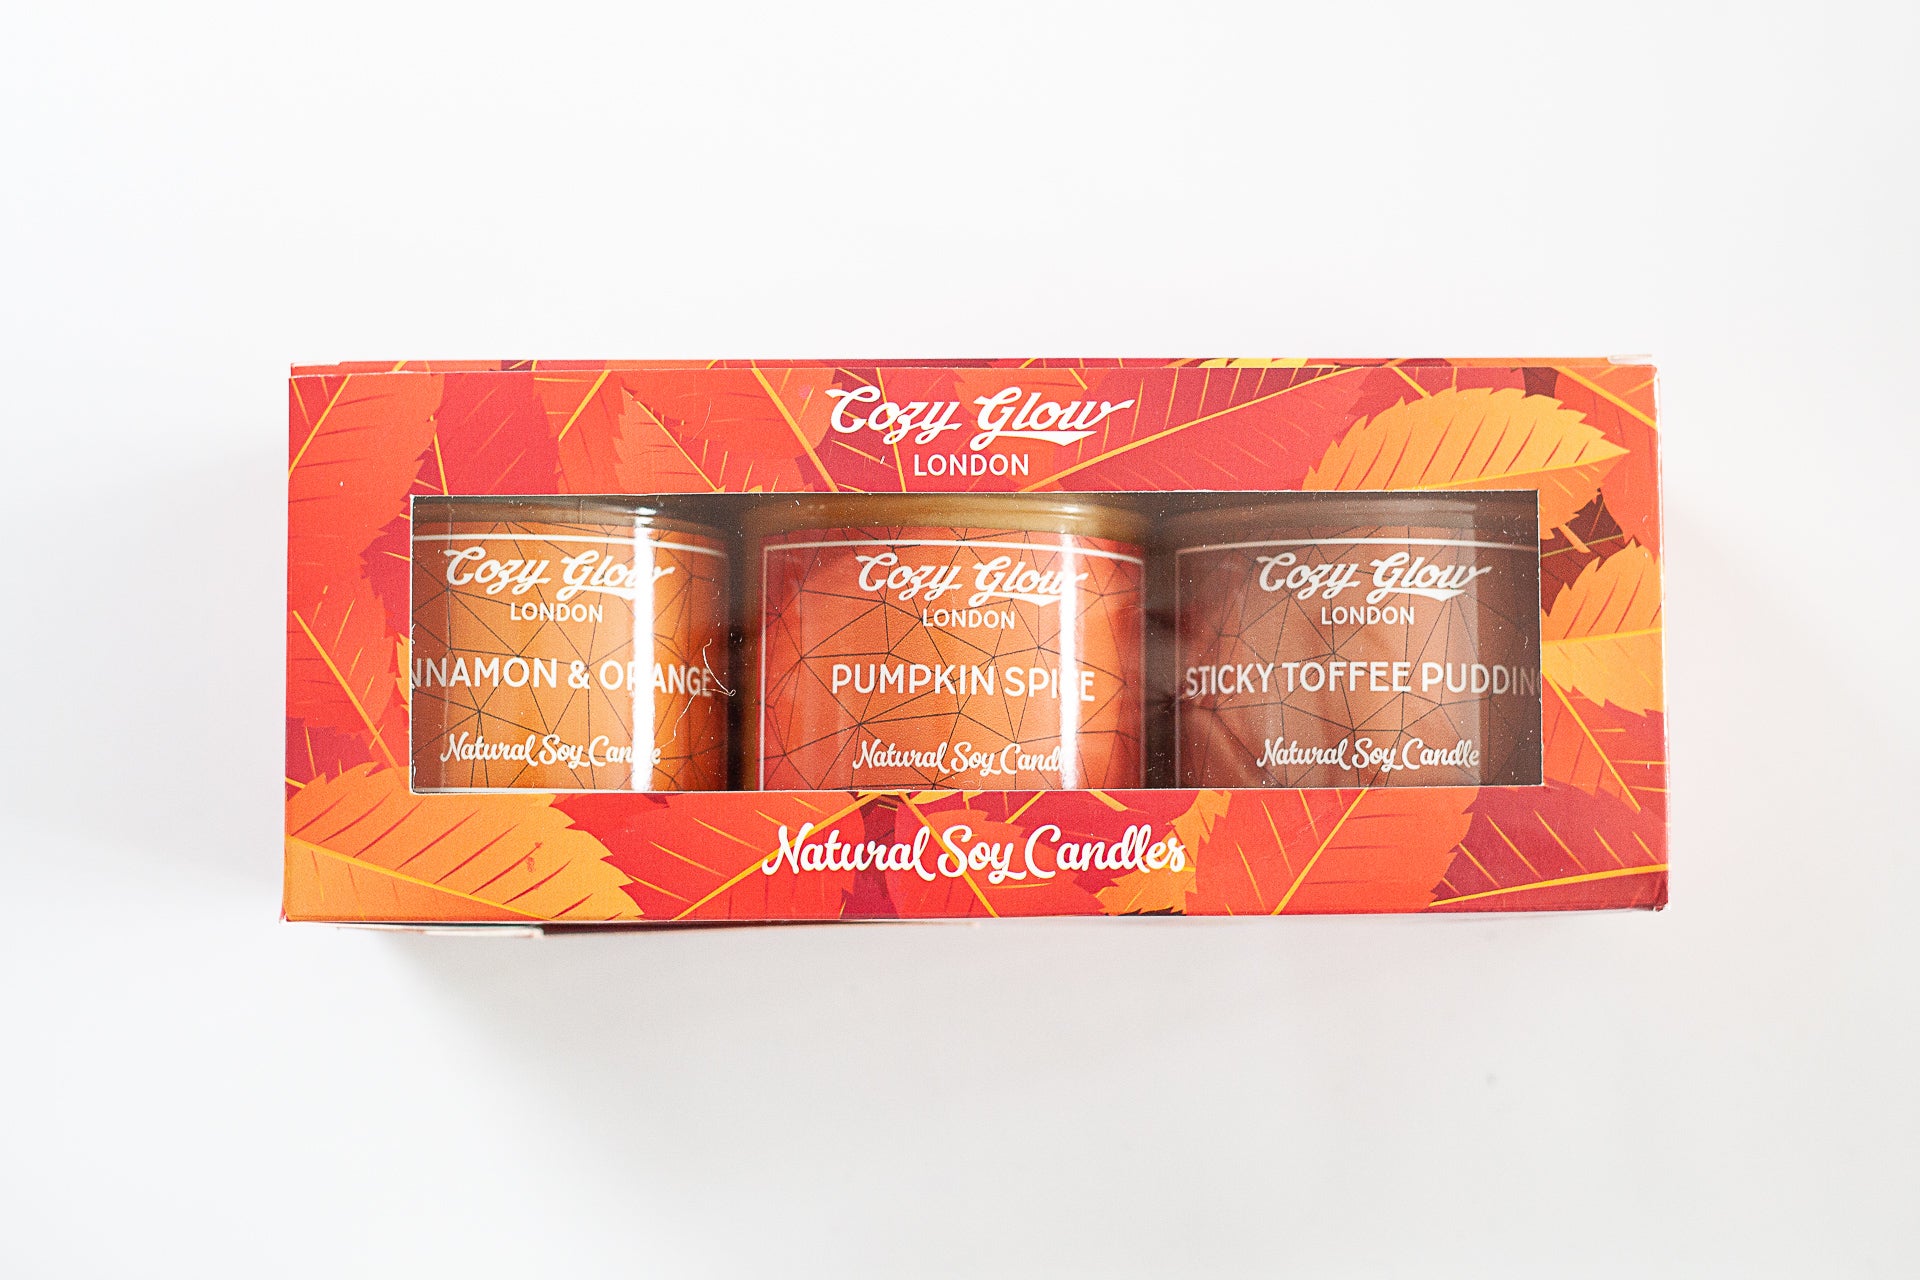 Cozy Glow Halloween Regular Soy Candles Trio
Pumpkin Spice, Cinnamon & Orange, & Sticky Toffee Pudding